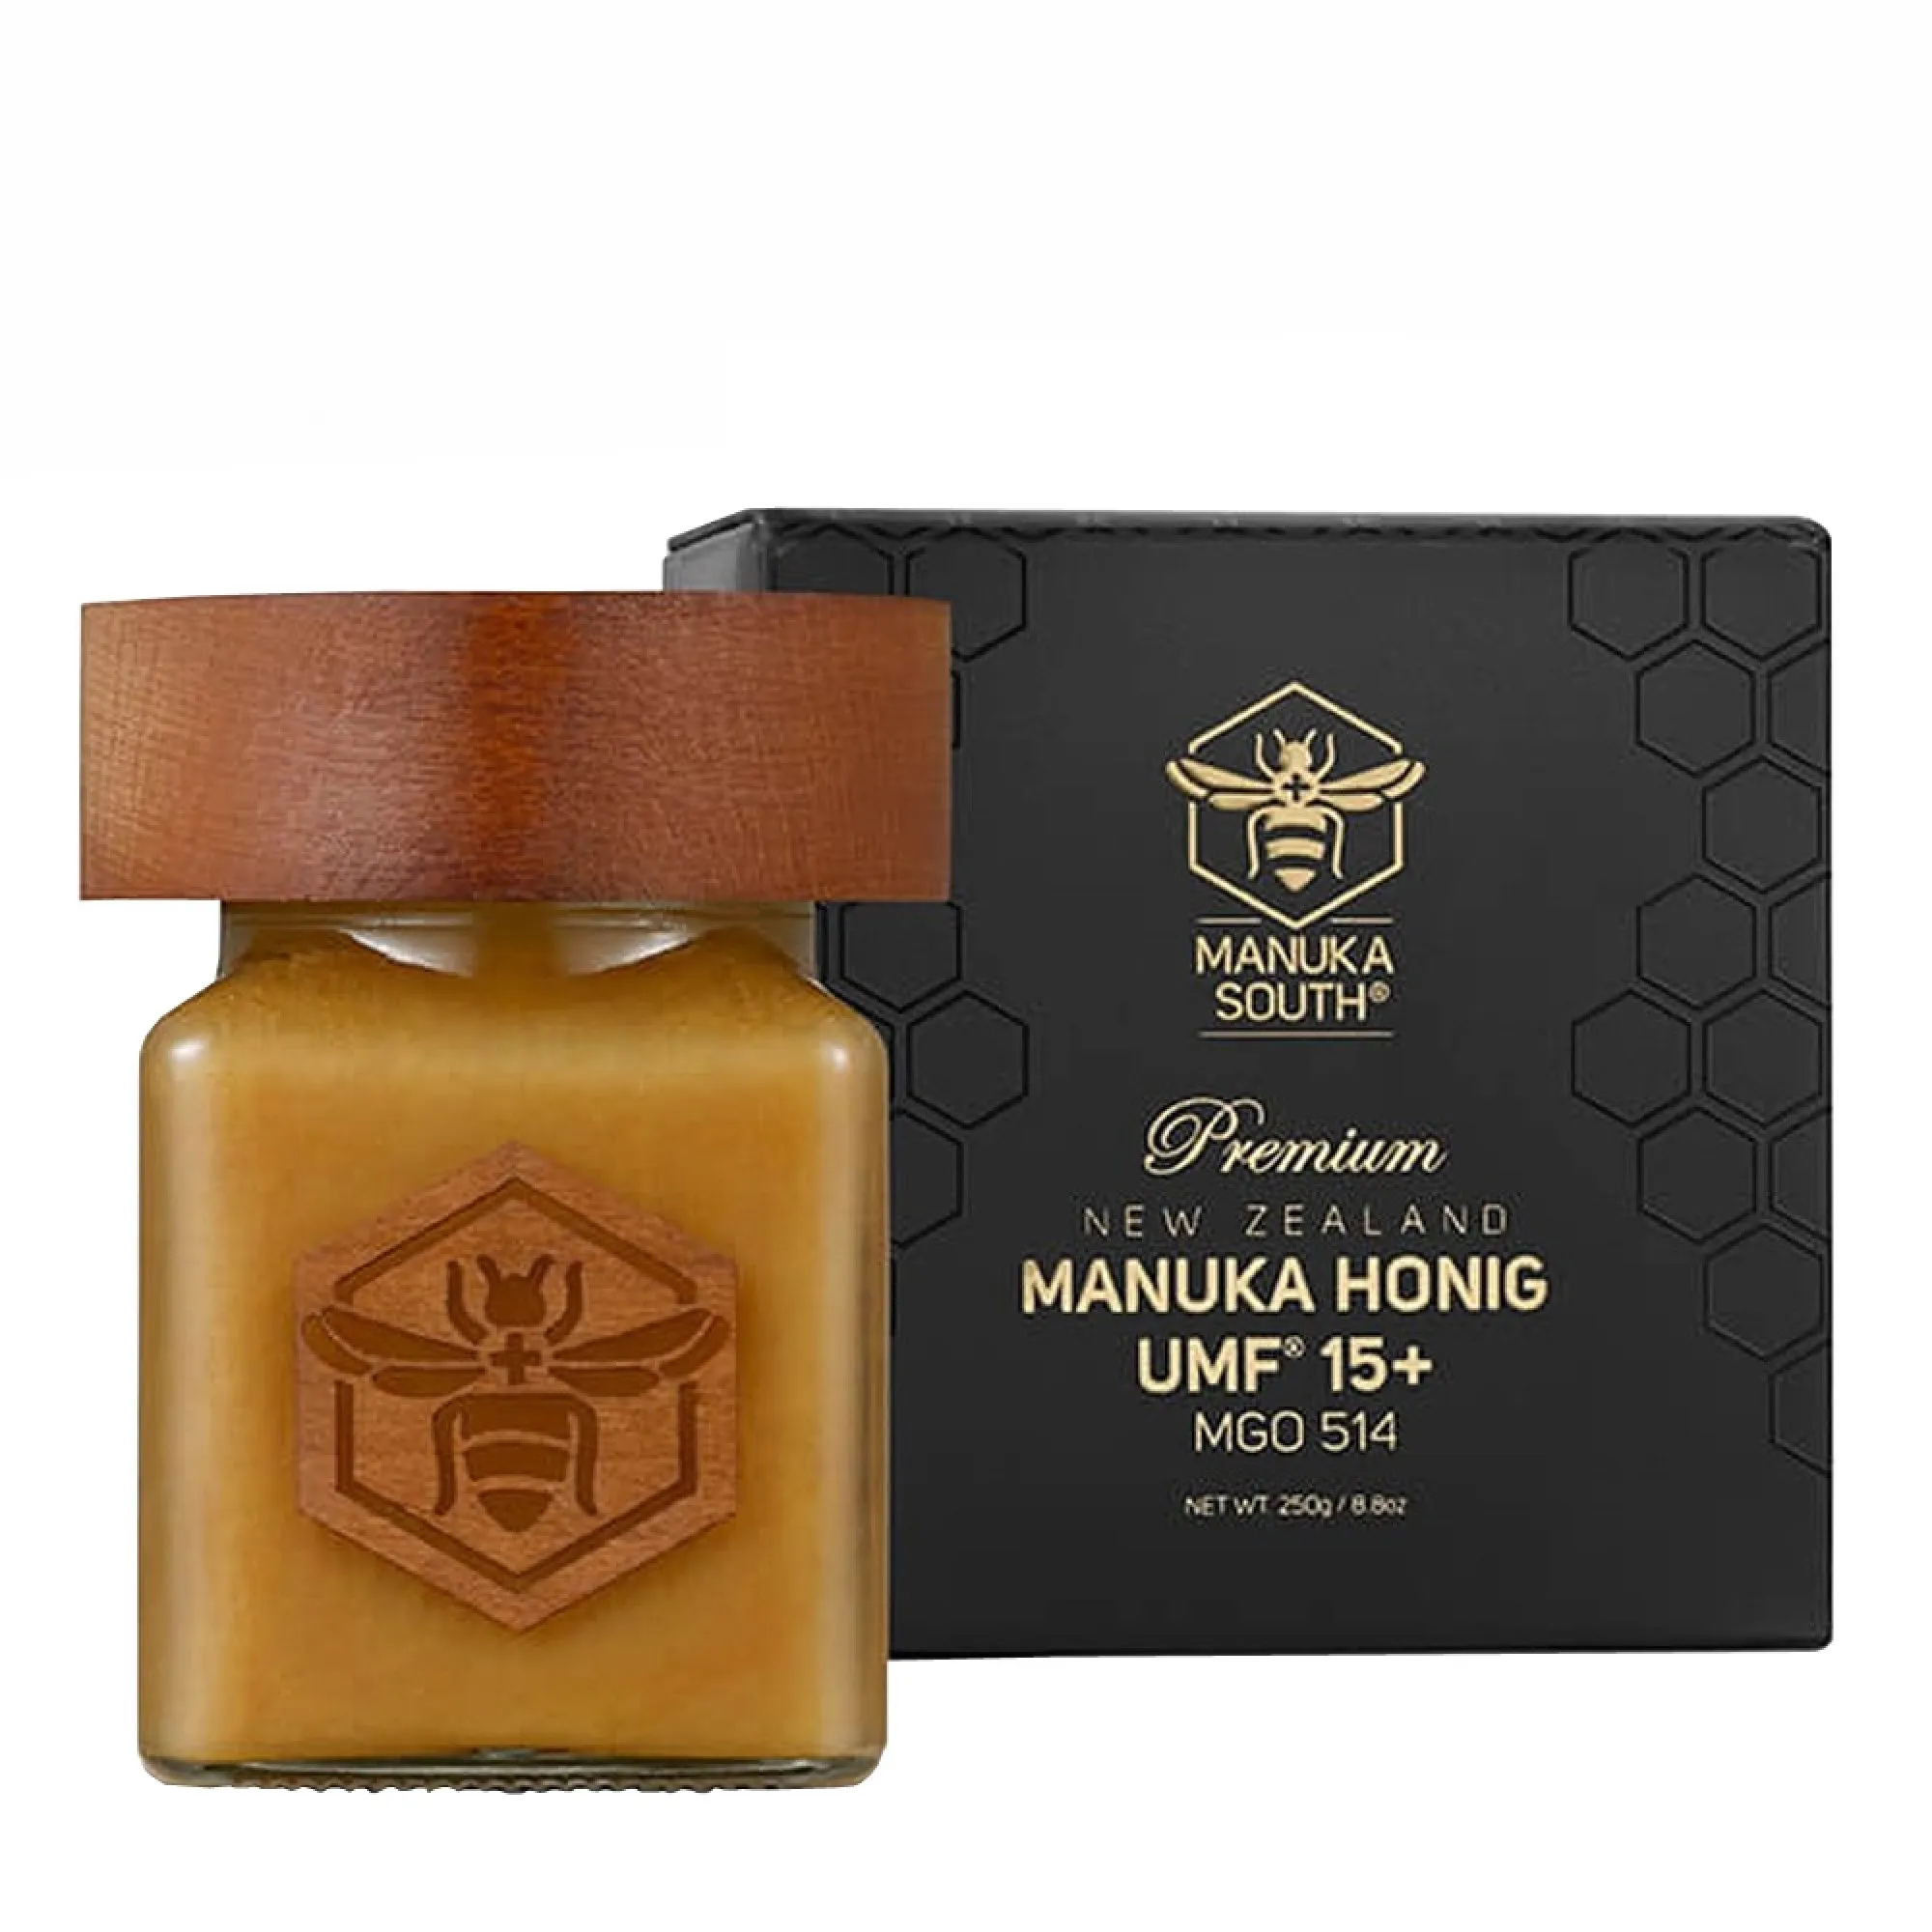 Miere de Manuka Premium Manuka South ®, UMF®15+(MGO 514+), 250g, Naturala [0]